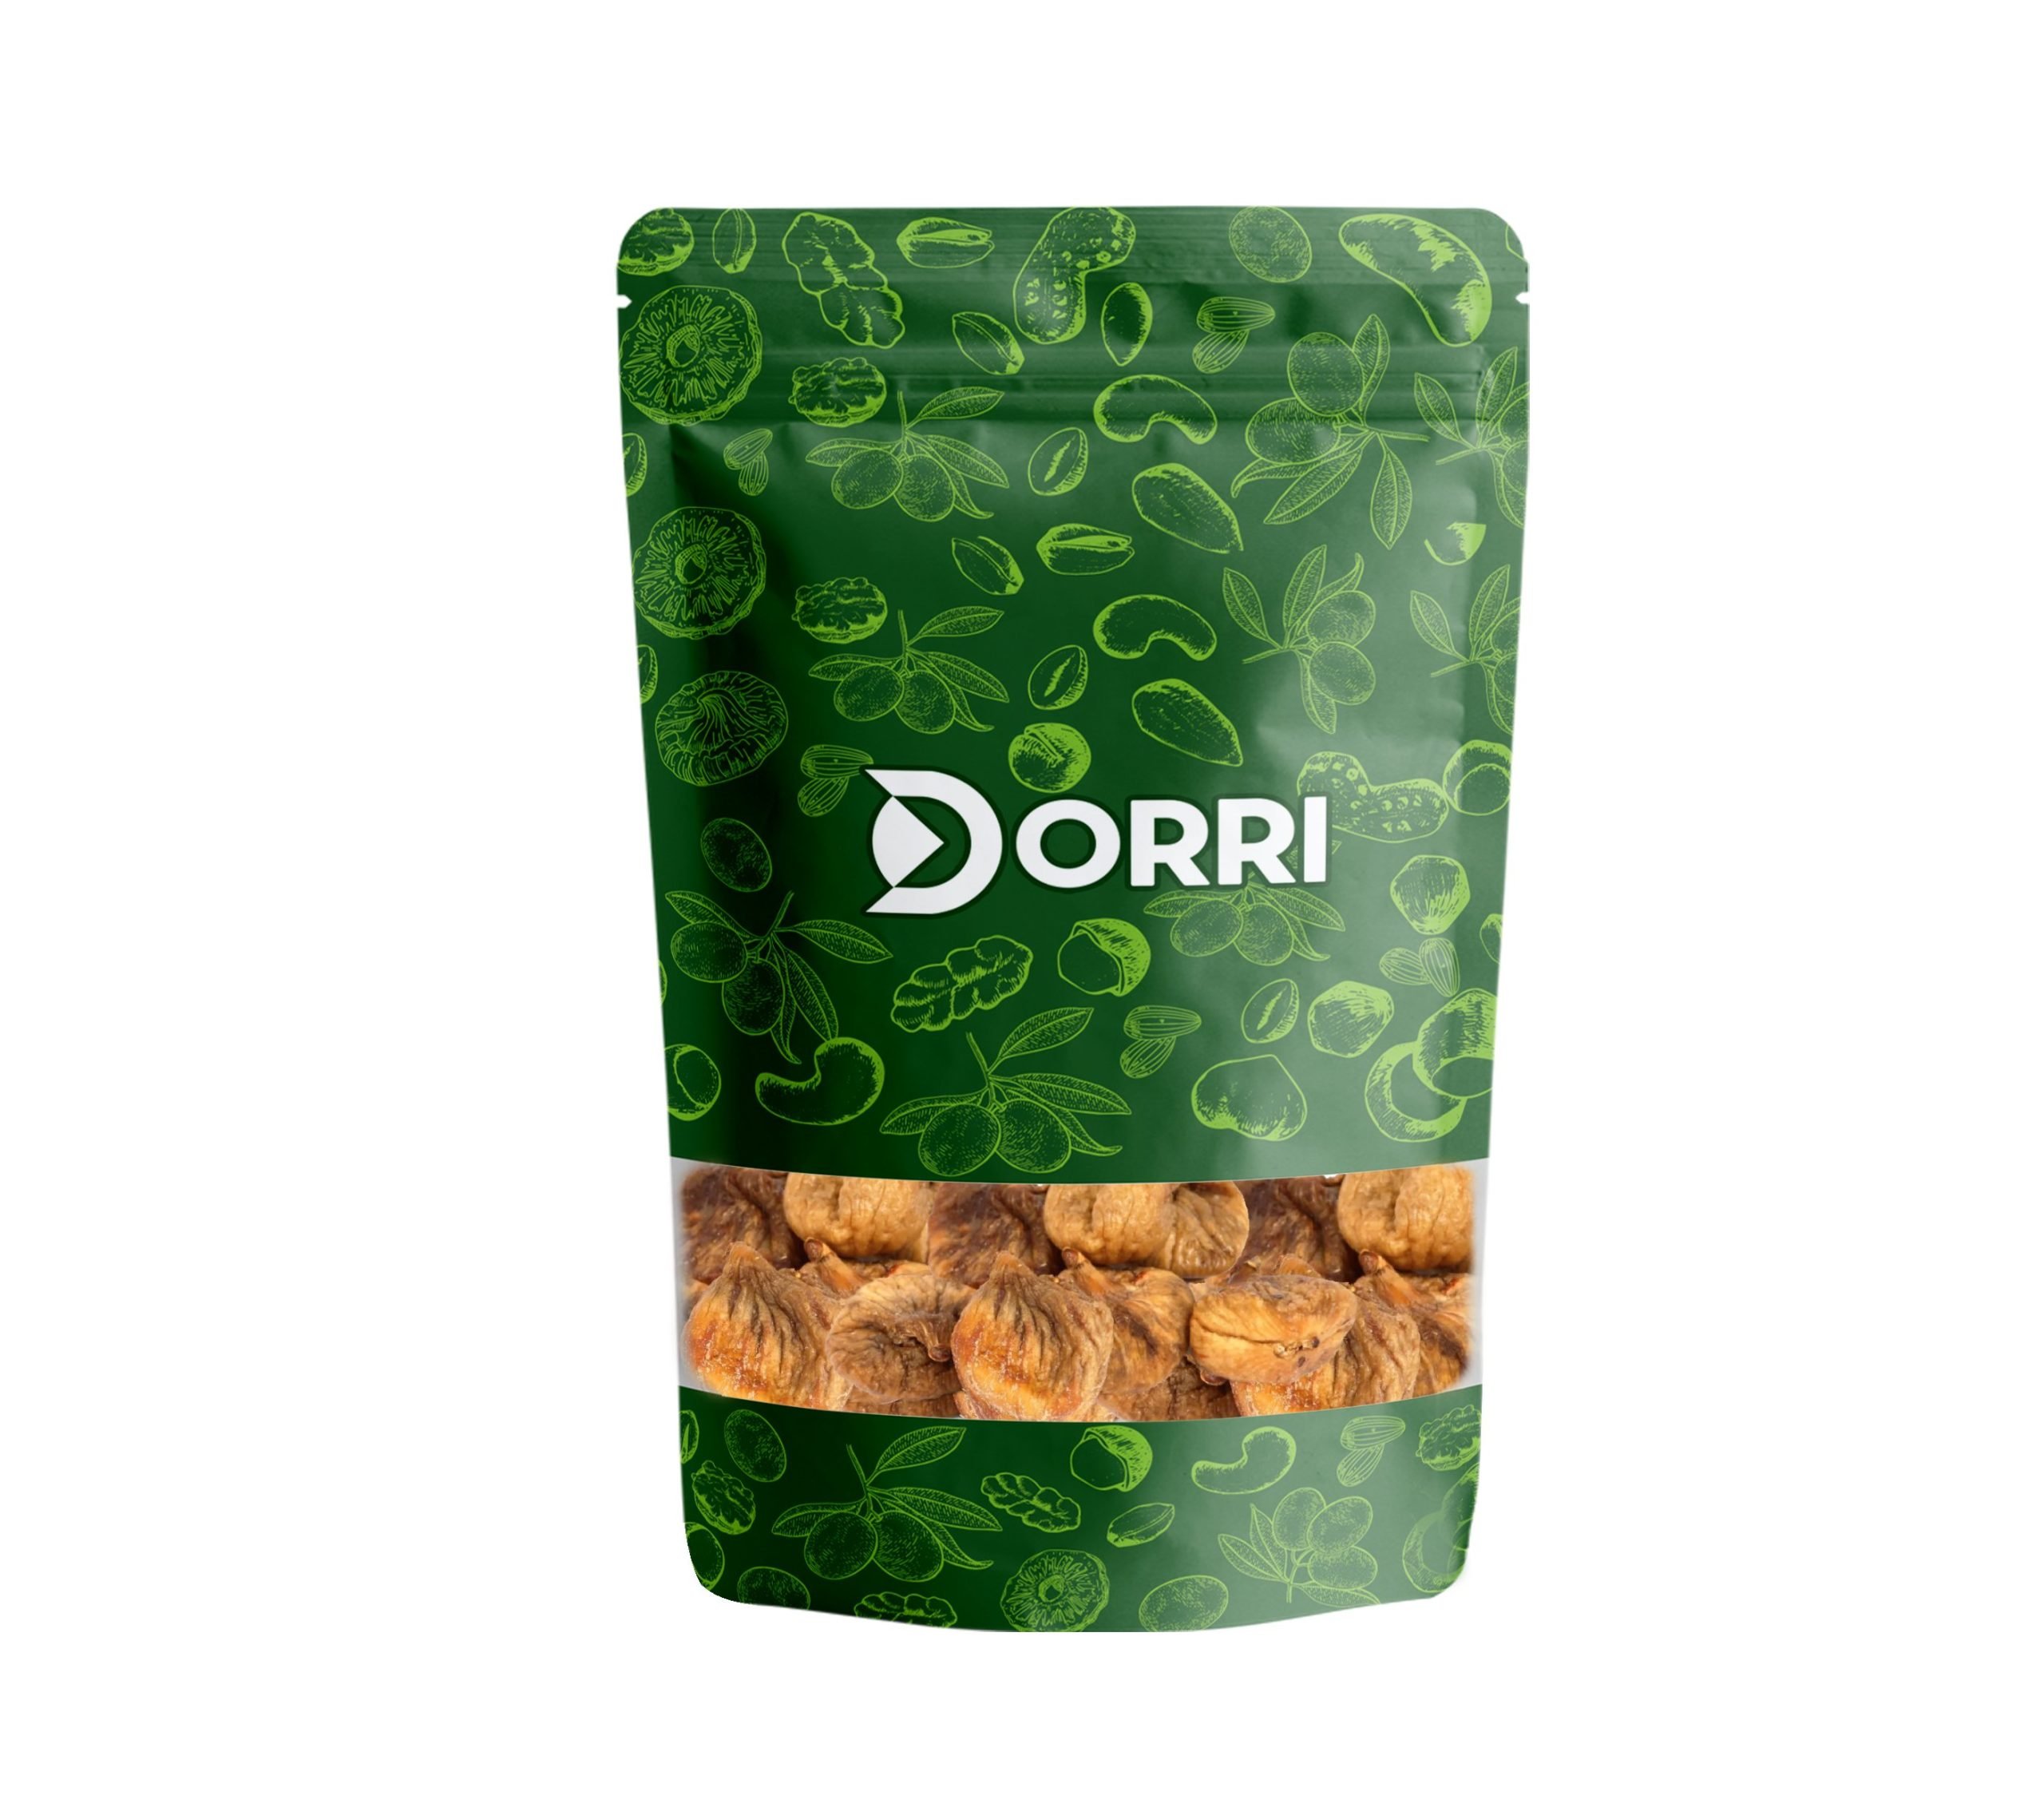 Dorri - Organic Figs